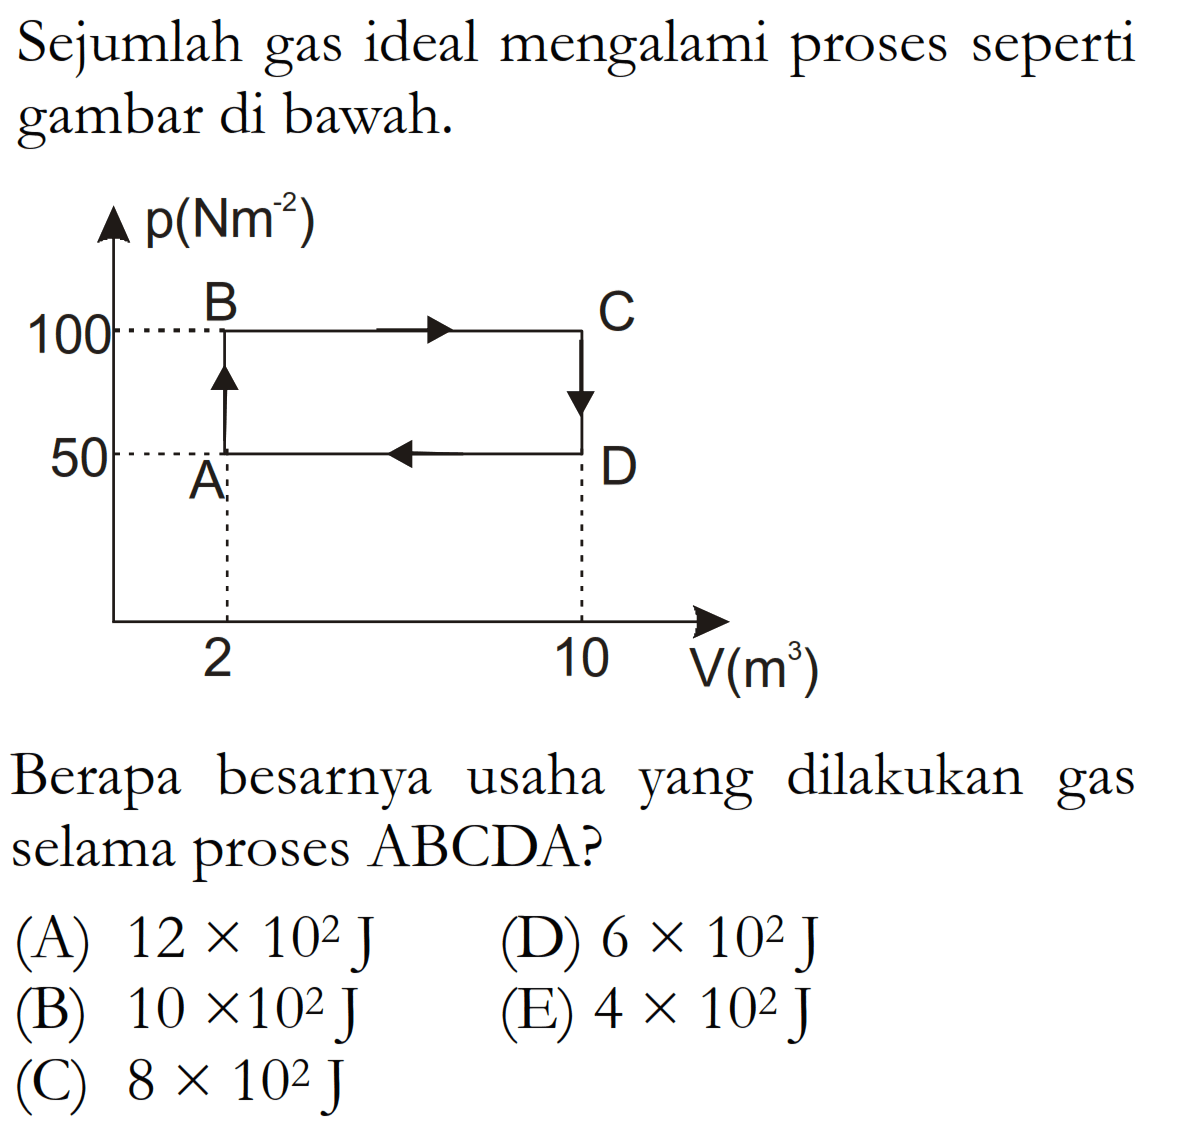 Sejumlah gas ideal mengalami proses seperti gambar di bawah. p(Nm^(-2)) 100 50 2 10 V(m^3) Berapa besarnya usaha yang dilakukan gas selama proses ABCDA? (A) 12 x 10^2 J (D) 6 x 10^2 J (B) 10 x 10^2 J (E) 4 x 10^2 J (C) 8 x 10^2 J